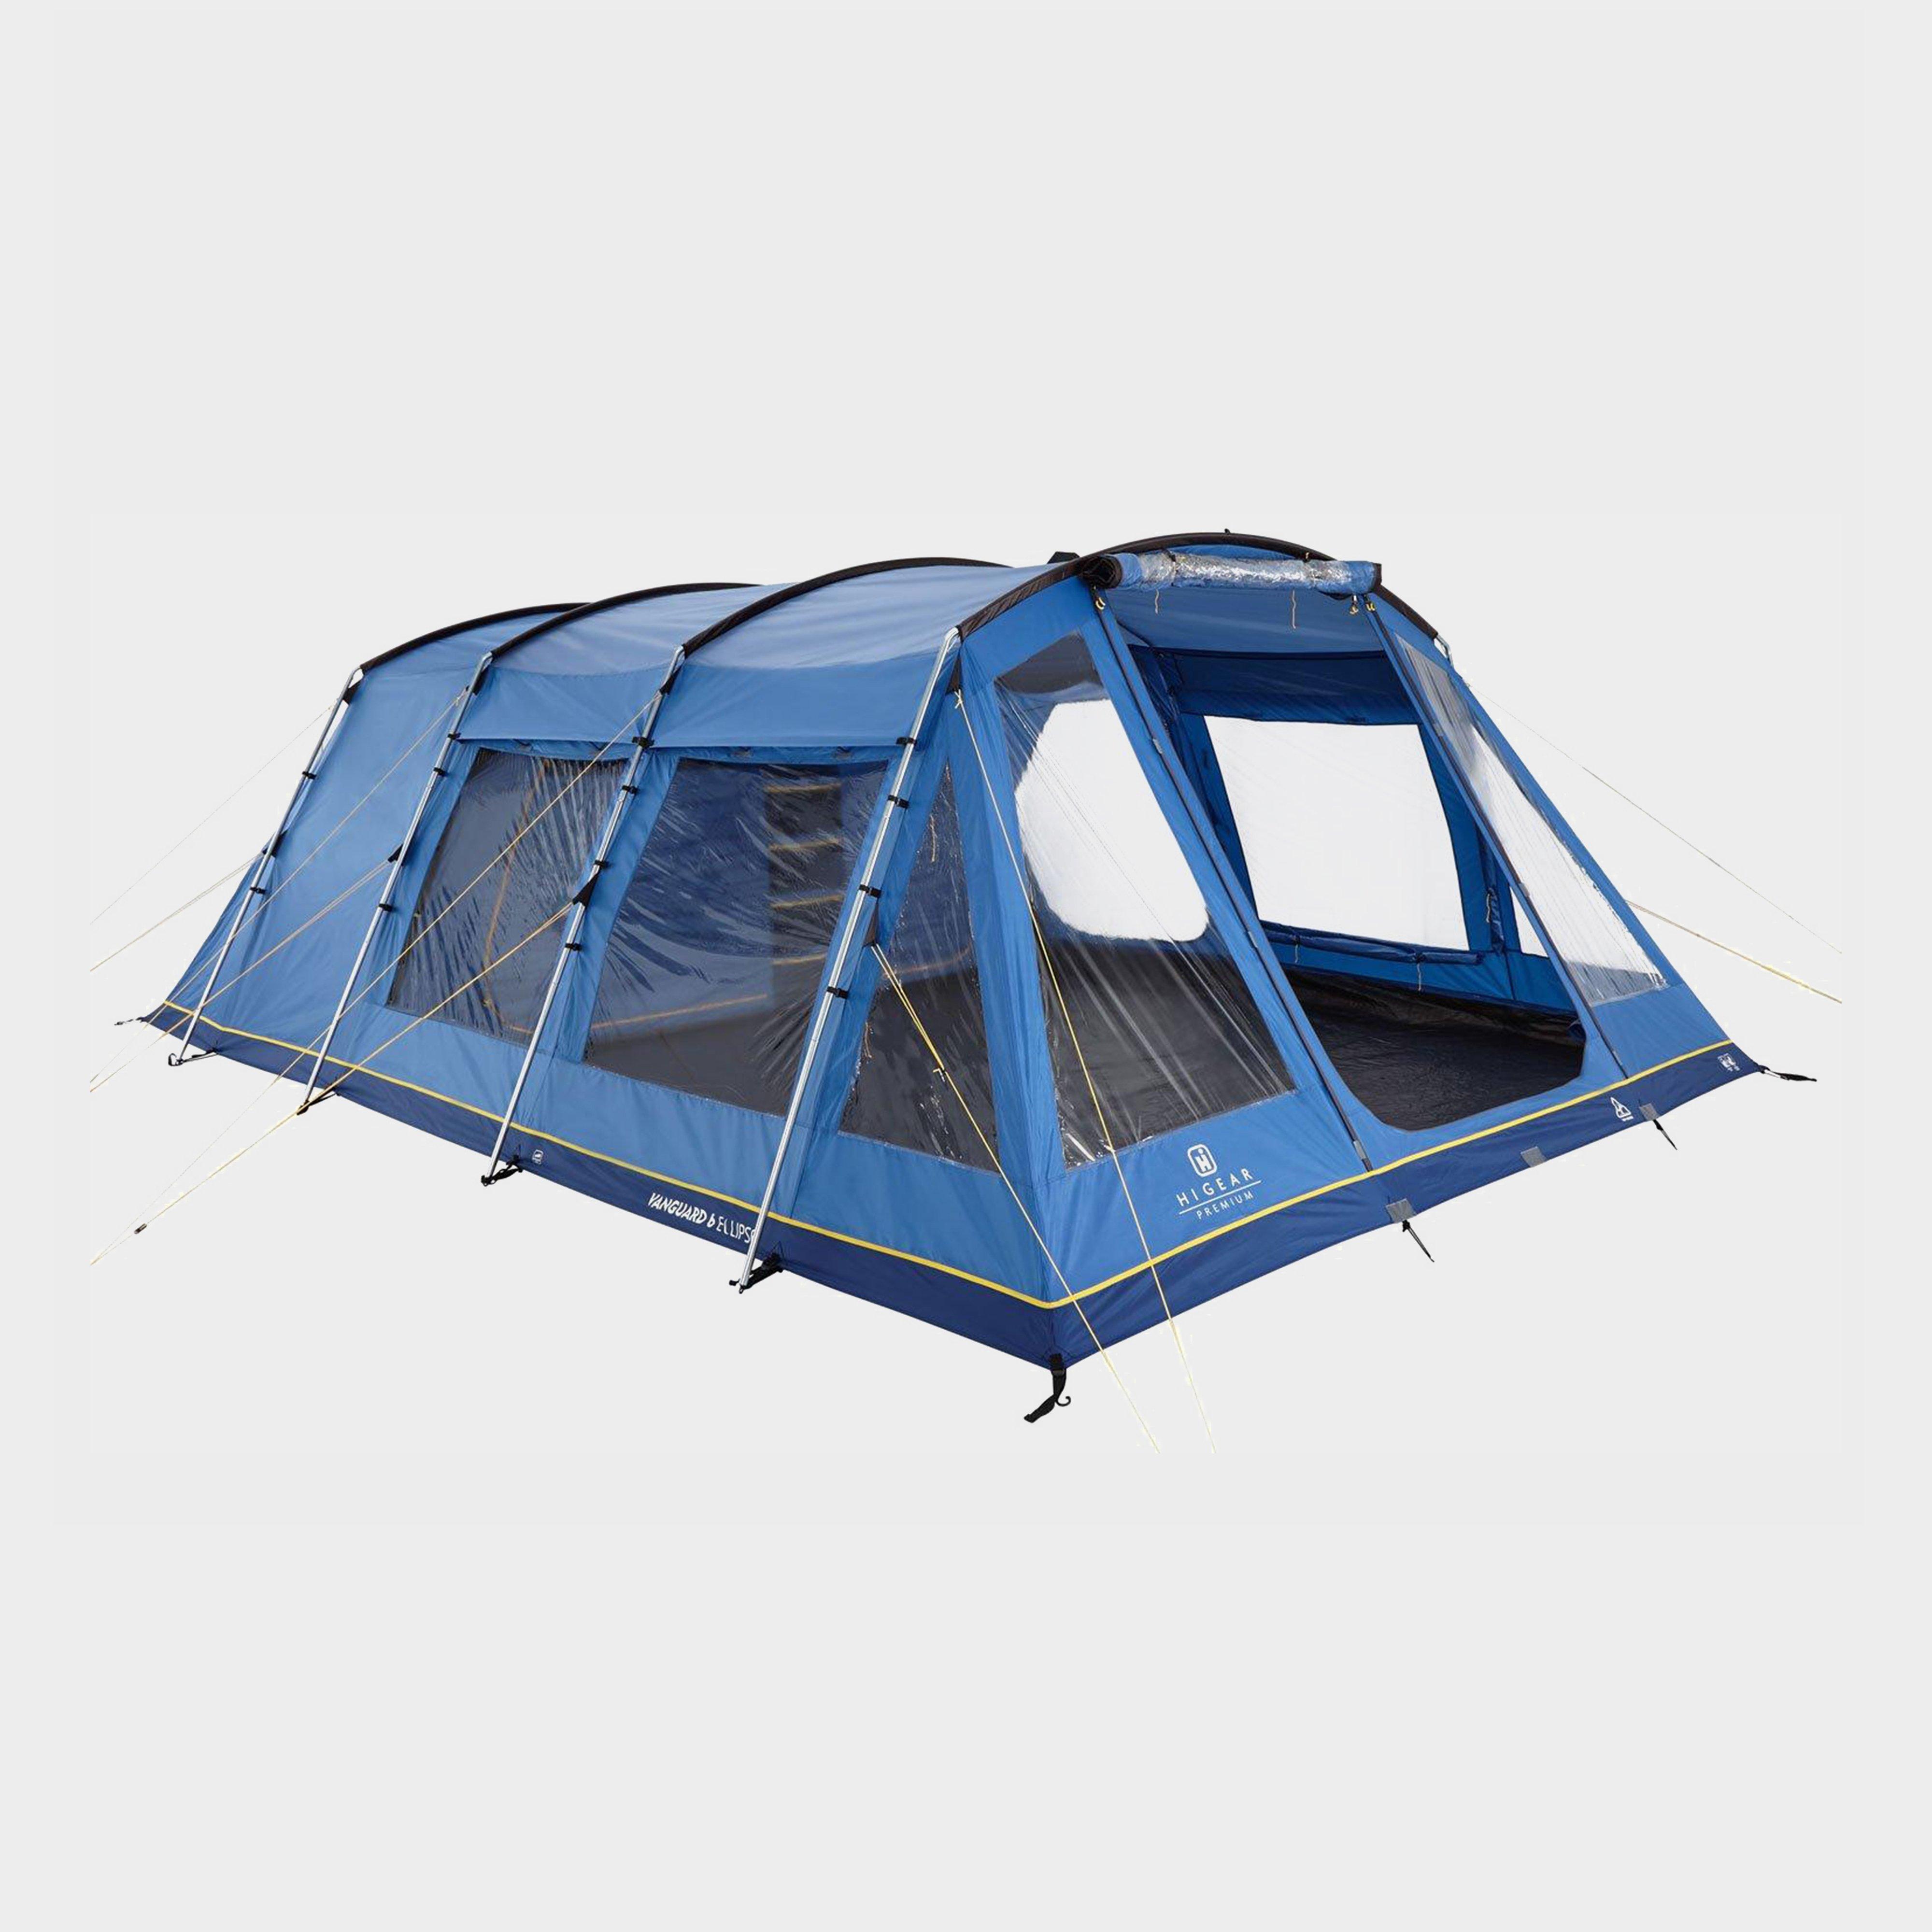 Hi-gear Vanguard Nightfall 6 Tent